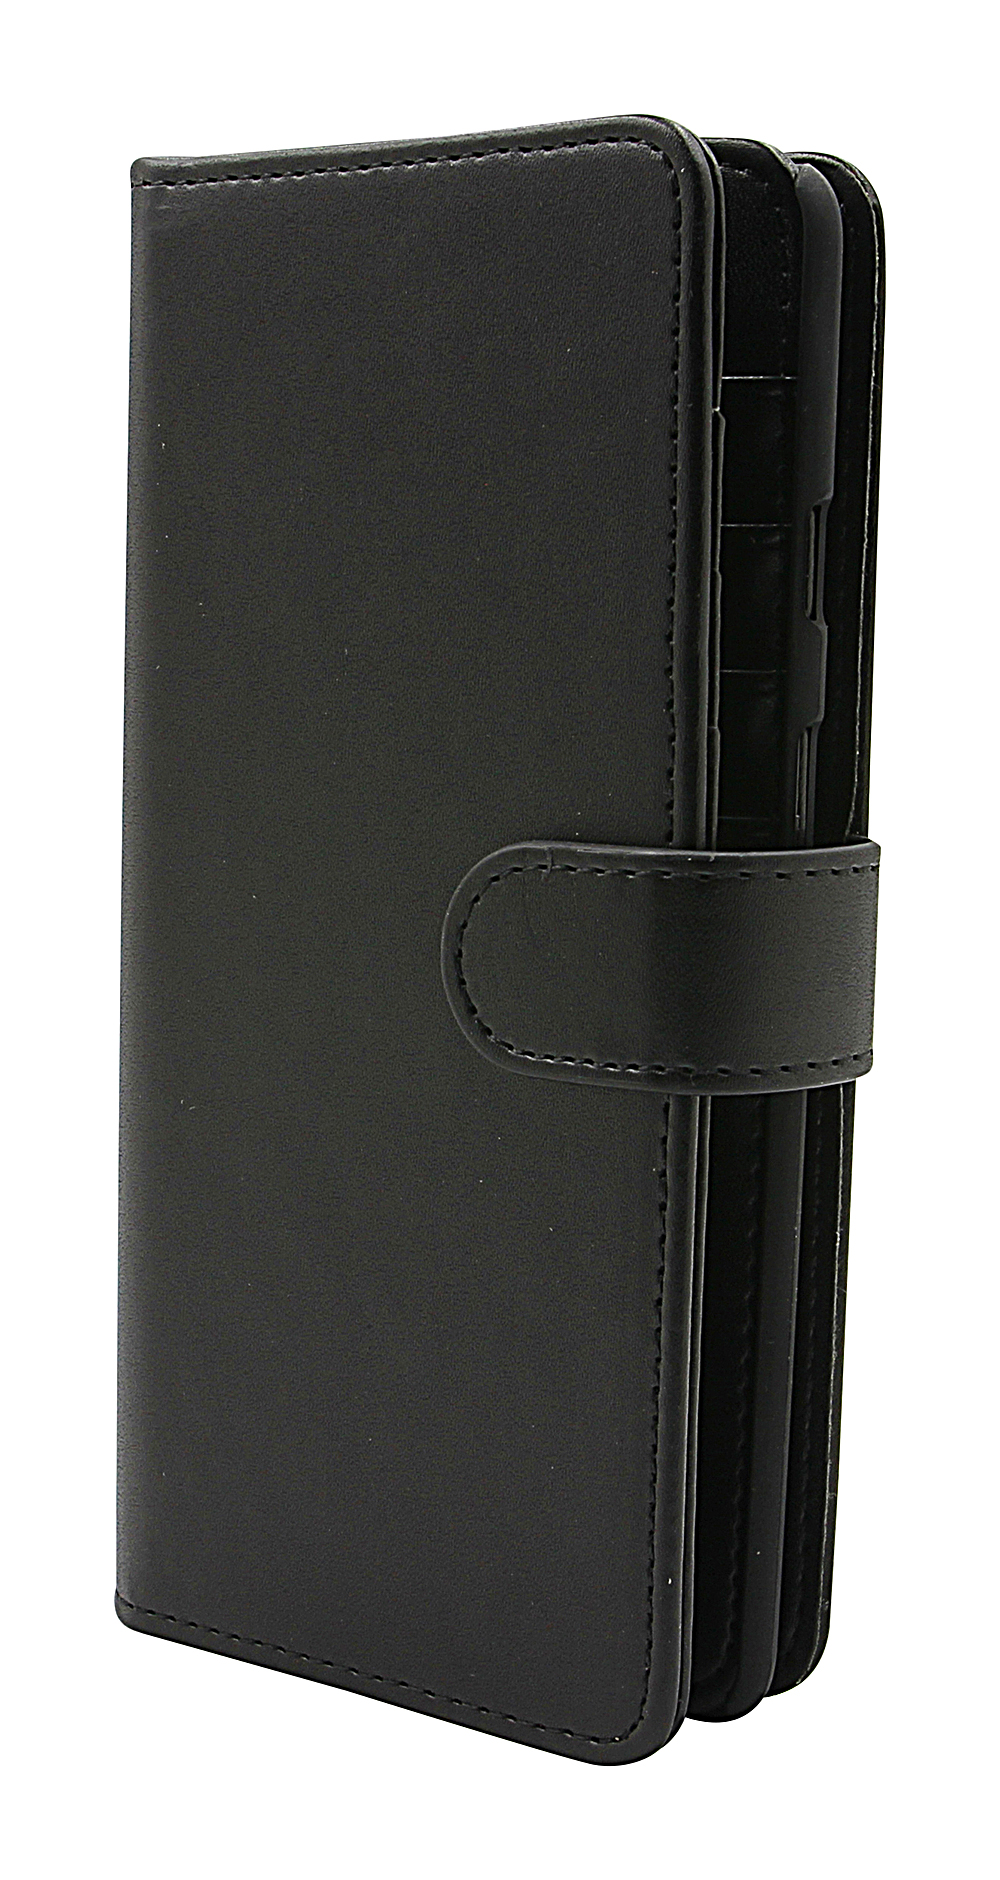 Skimblocker XL Magnet Wallet OnePlus 7T